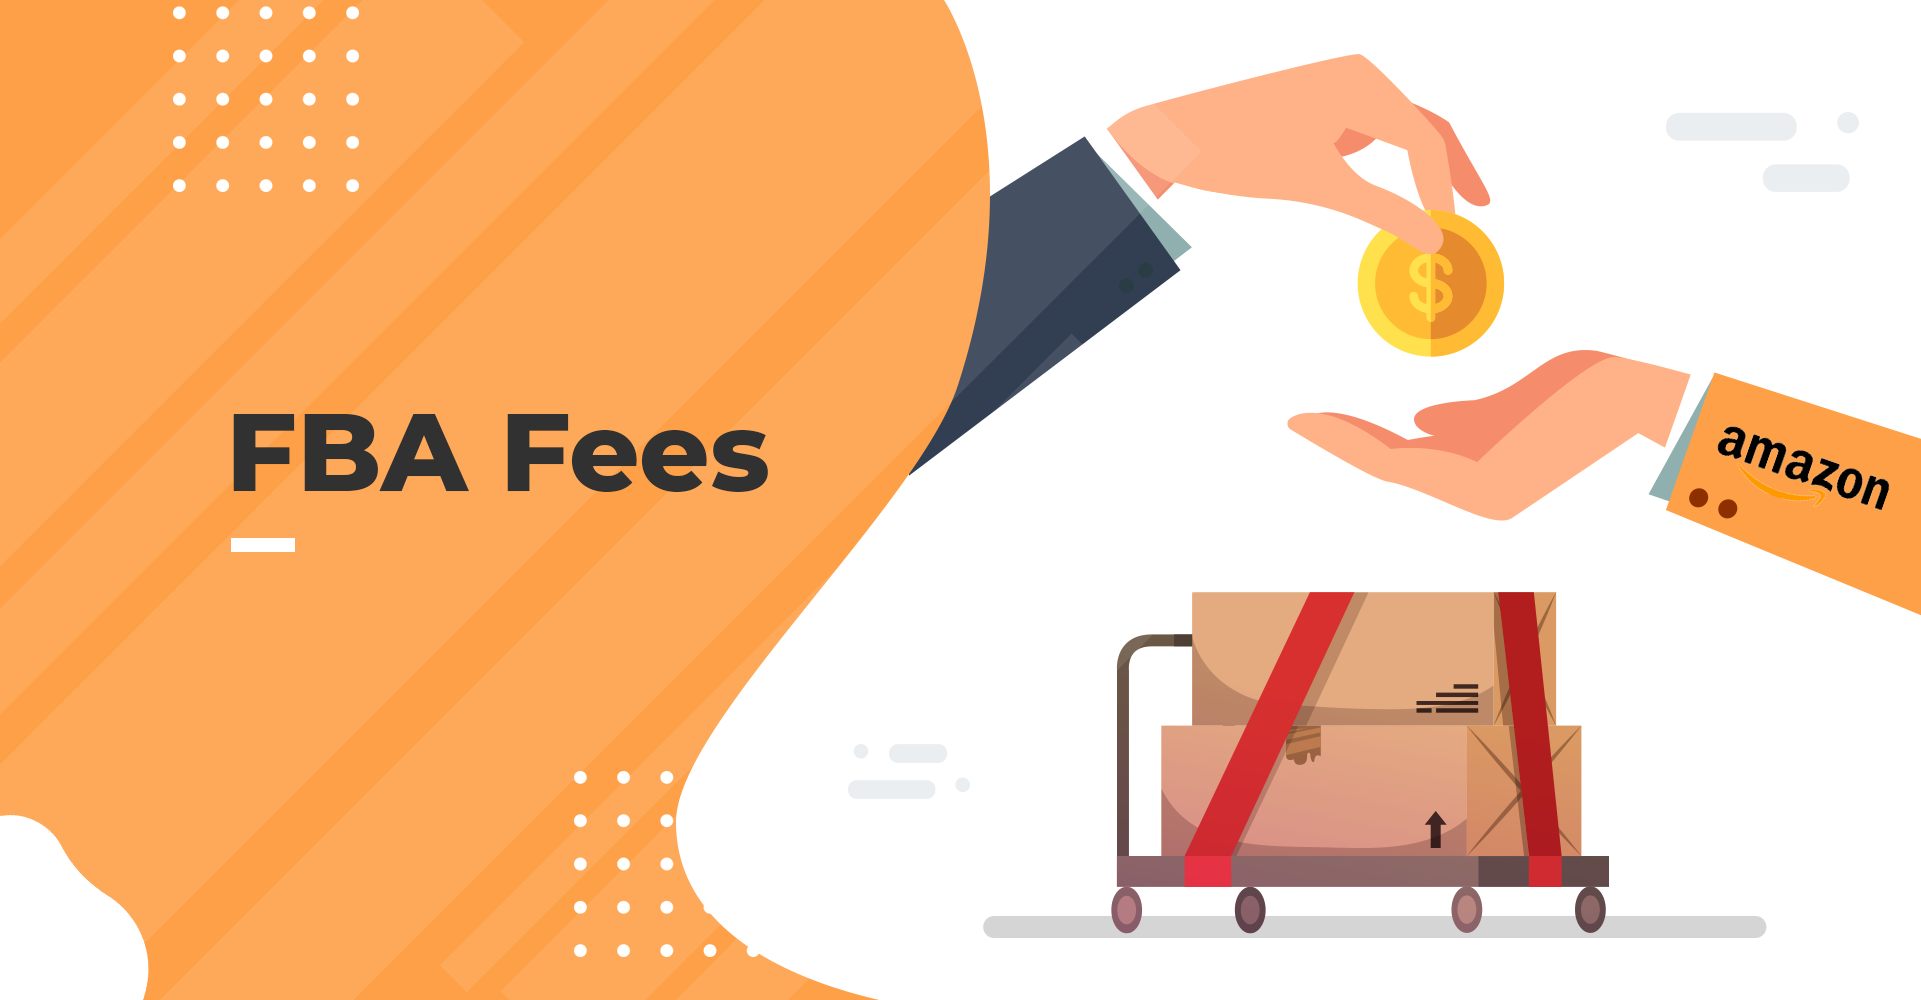 Types of Amazon FBA fees